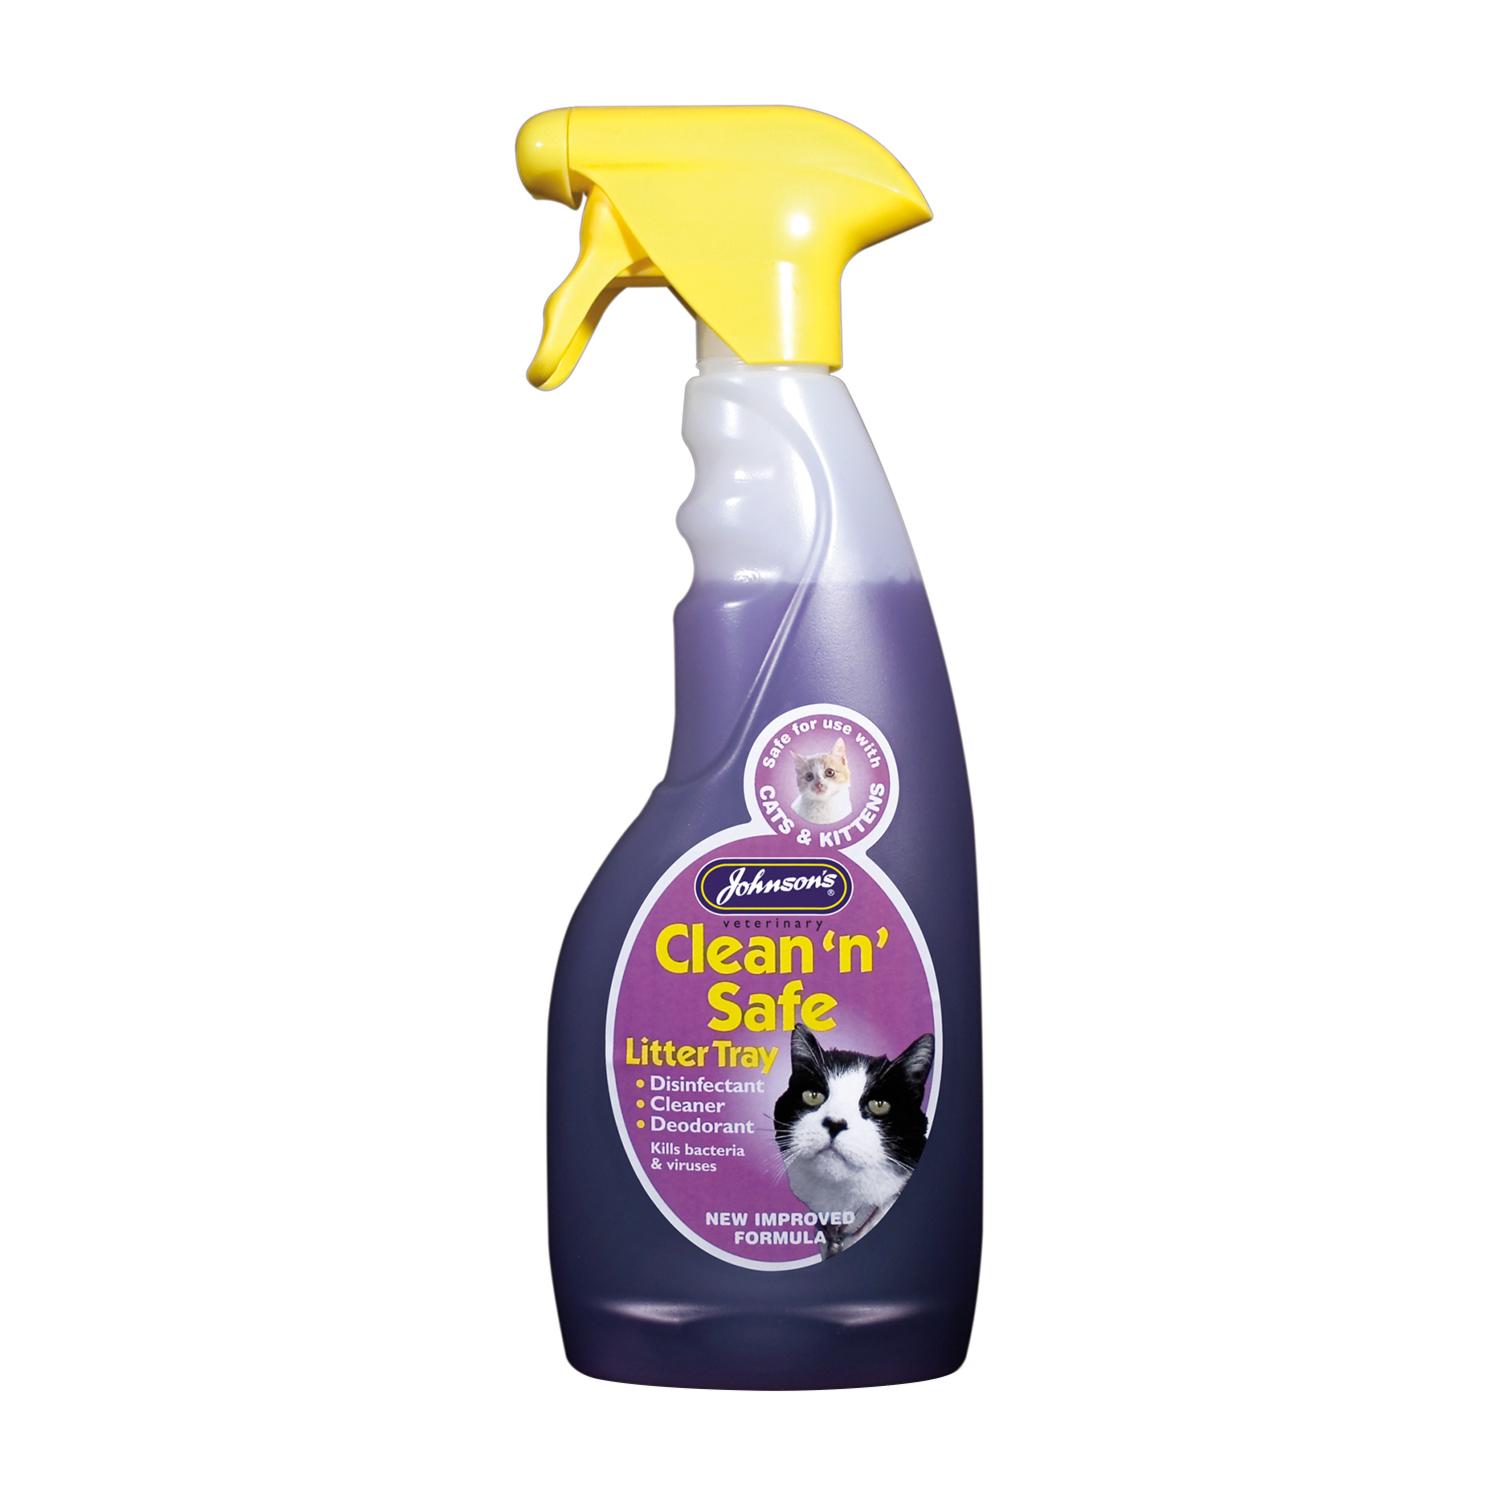 Johnson's Veterinary Clean n Safe Litter Tray Spray 500ml Image